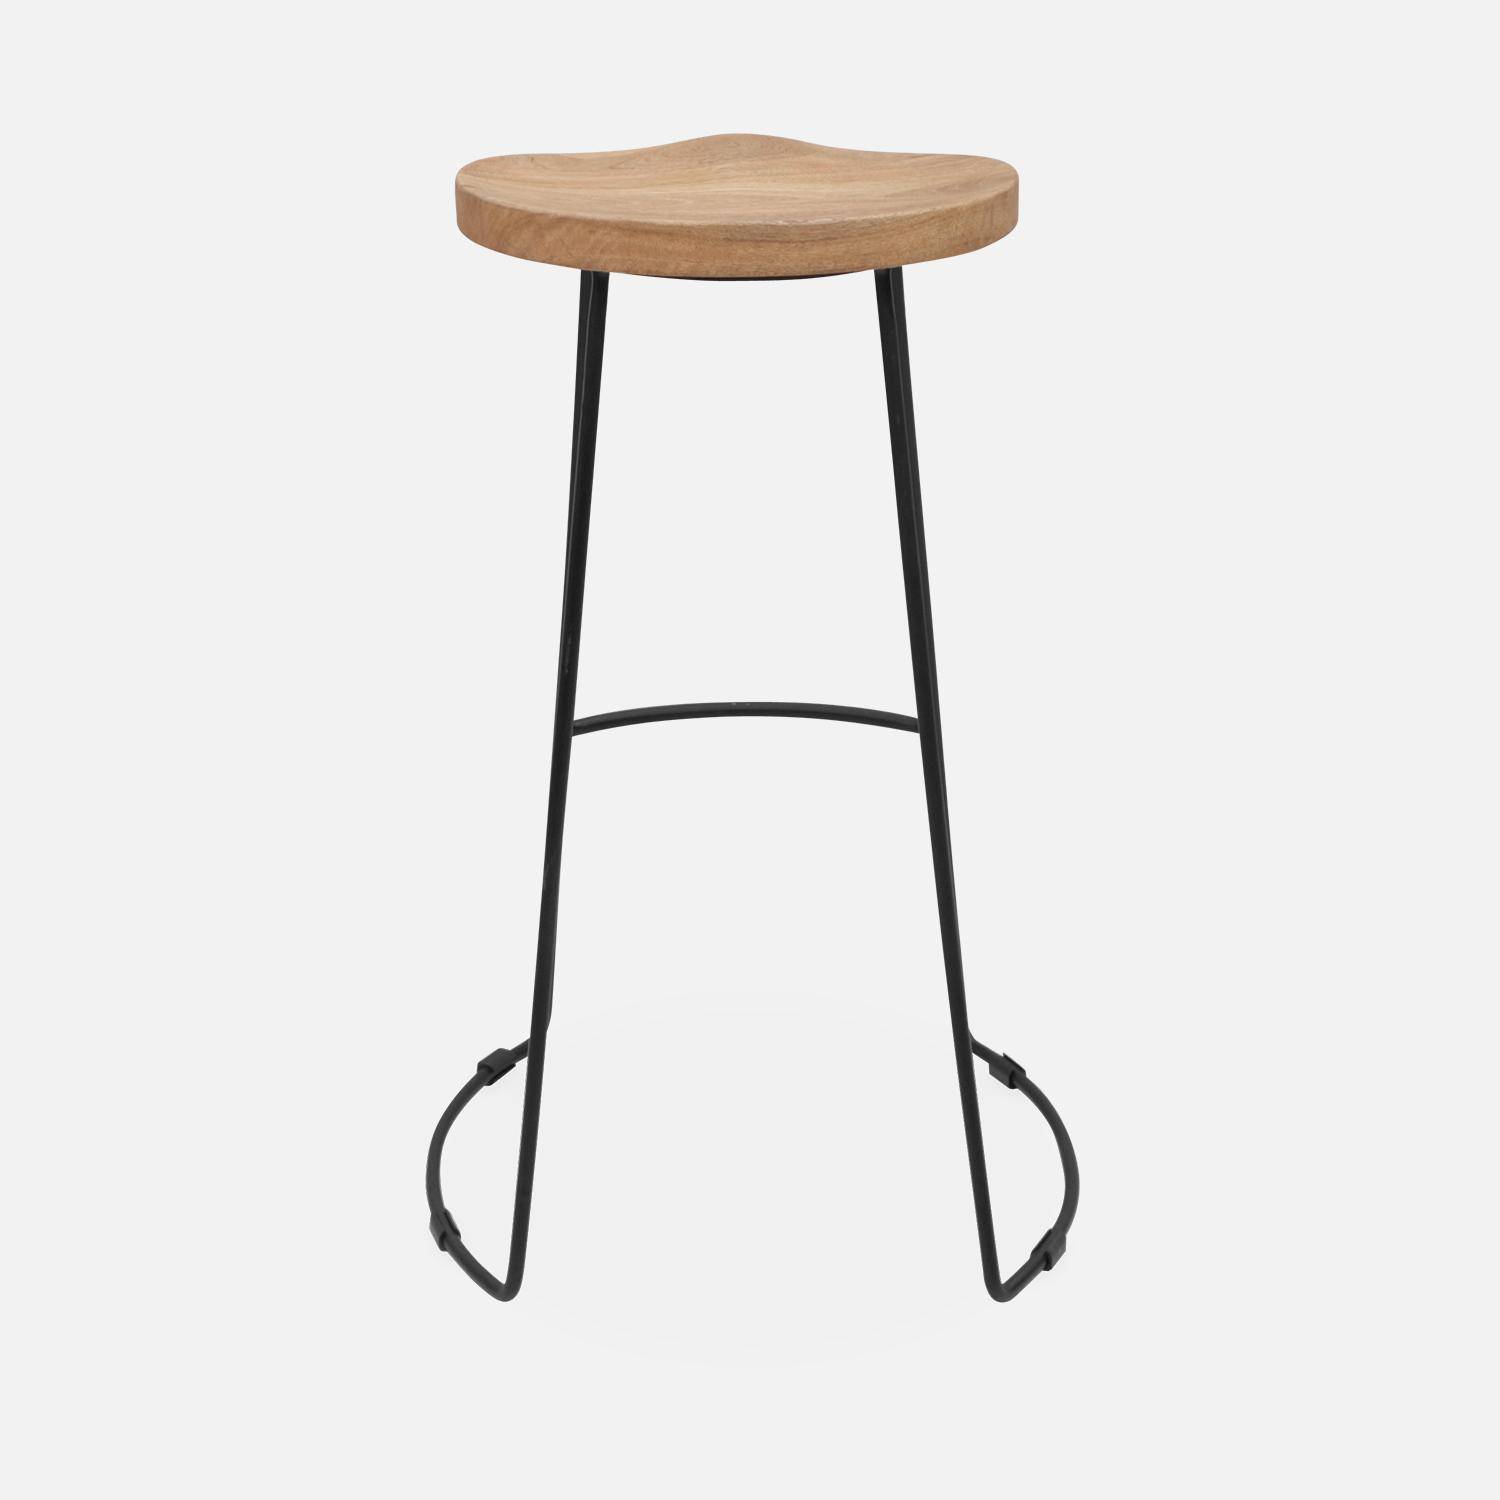 Pair of industrial metal and wooden bar stools, 47x40x75cm, Jaya, Natural, Mango wood seat, black metal legs,sweeek,Photo6